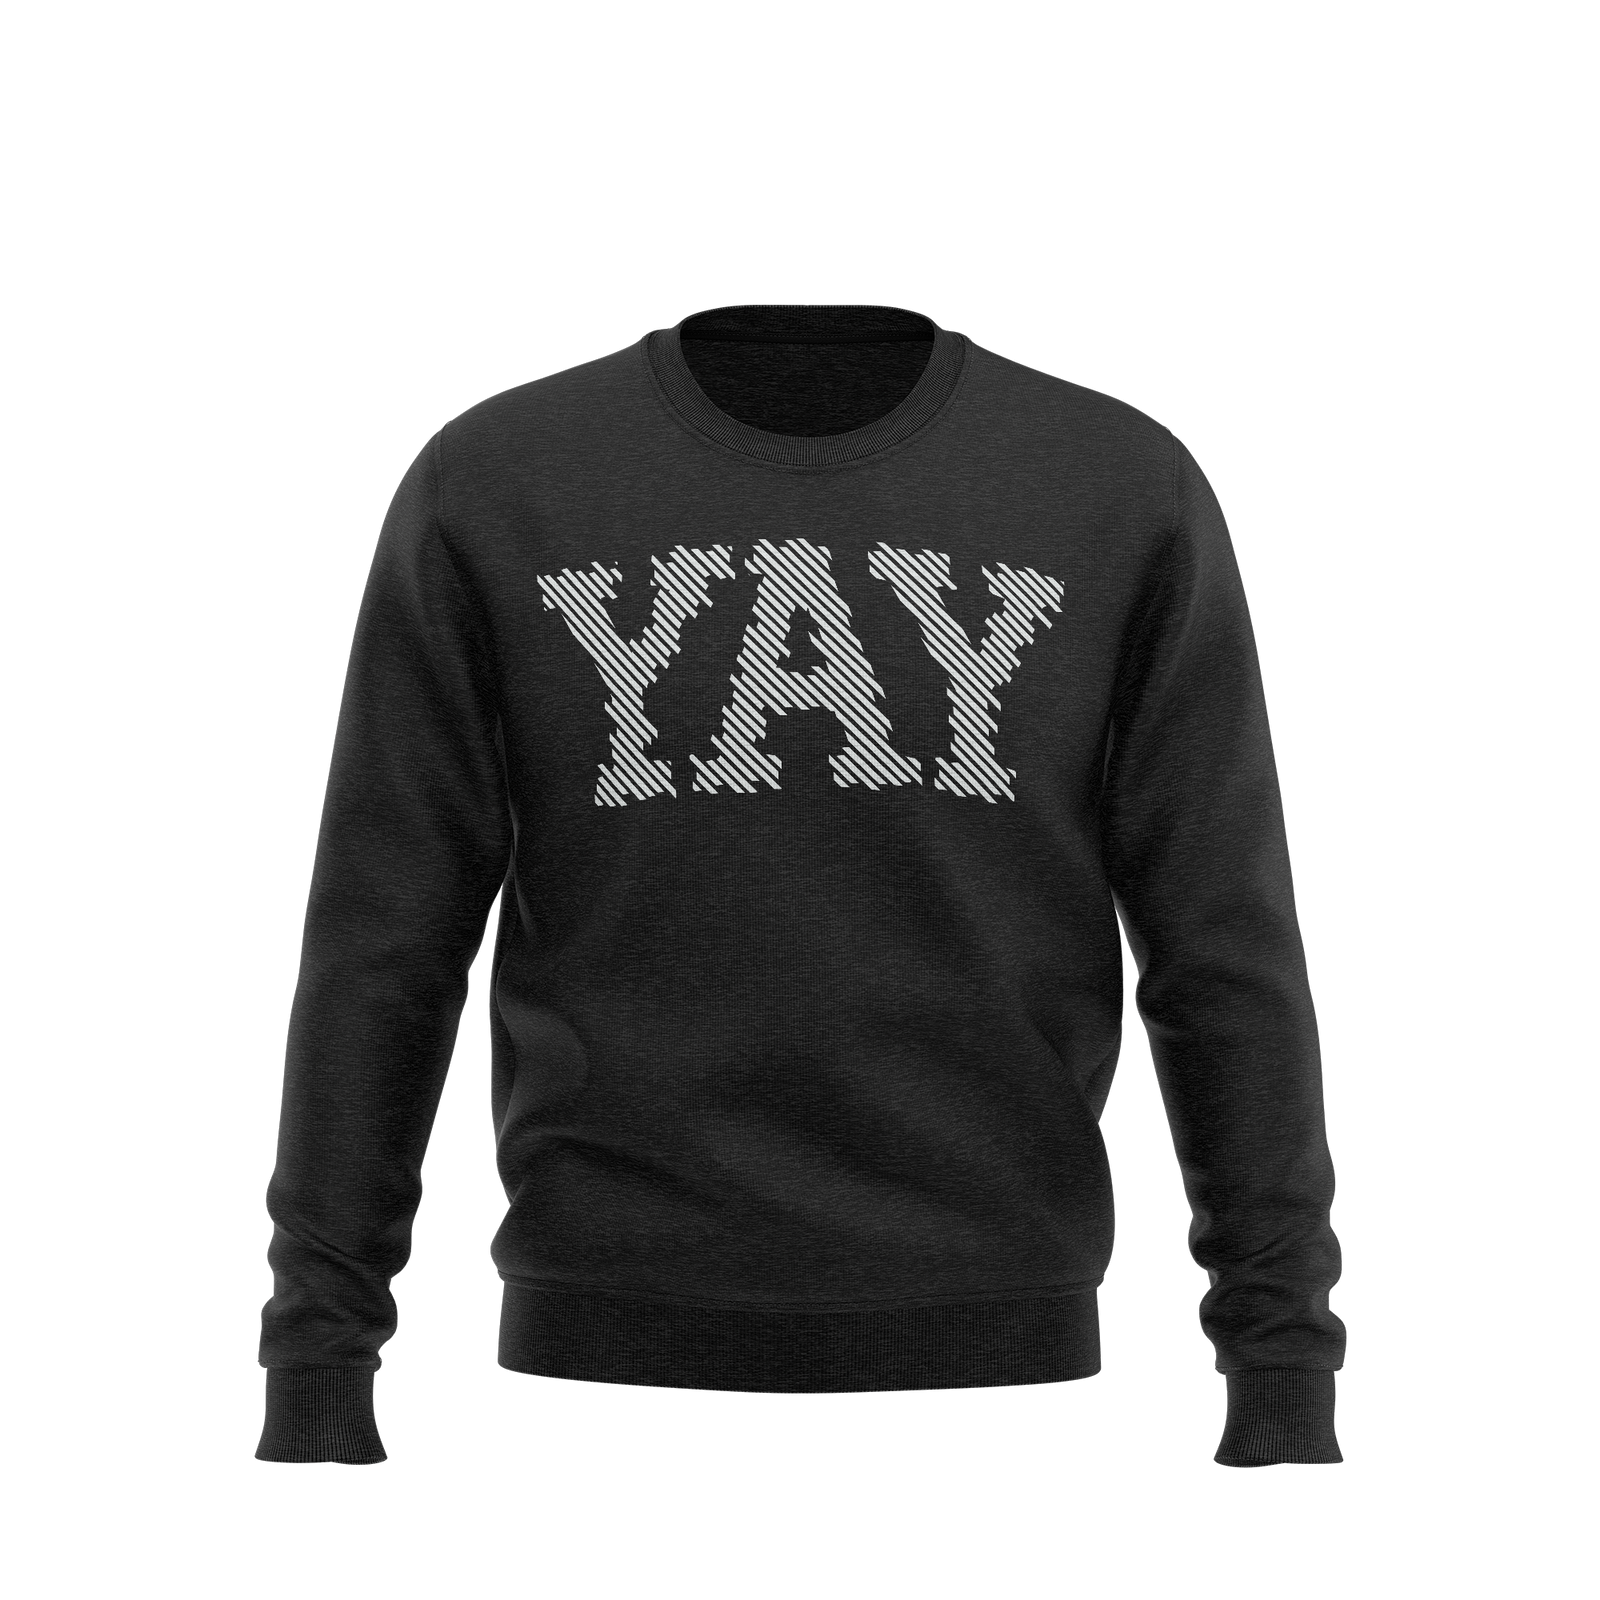 YAY Lines Crewneck Sweatshirt (Black)